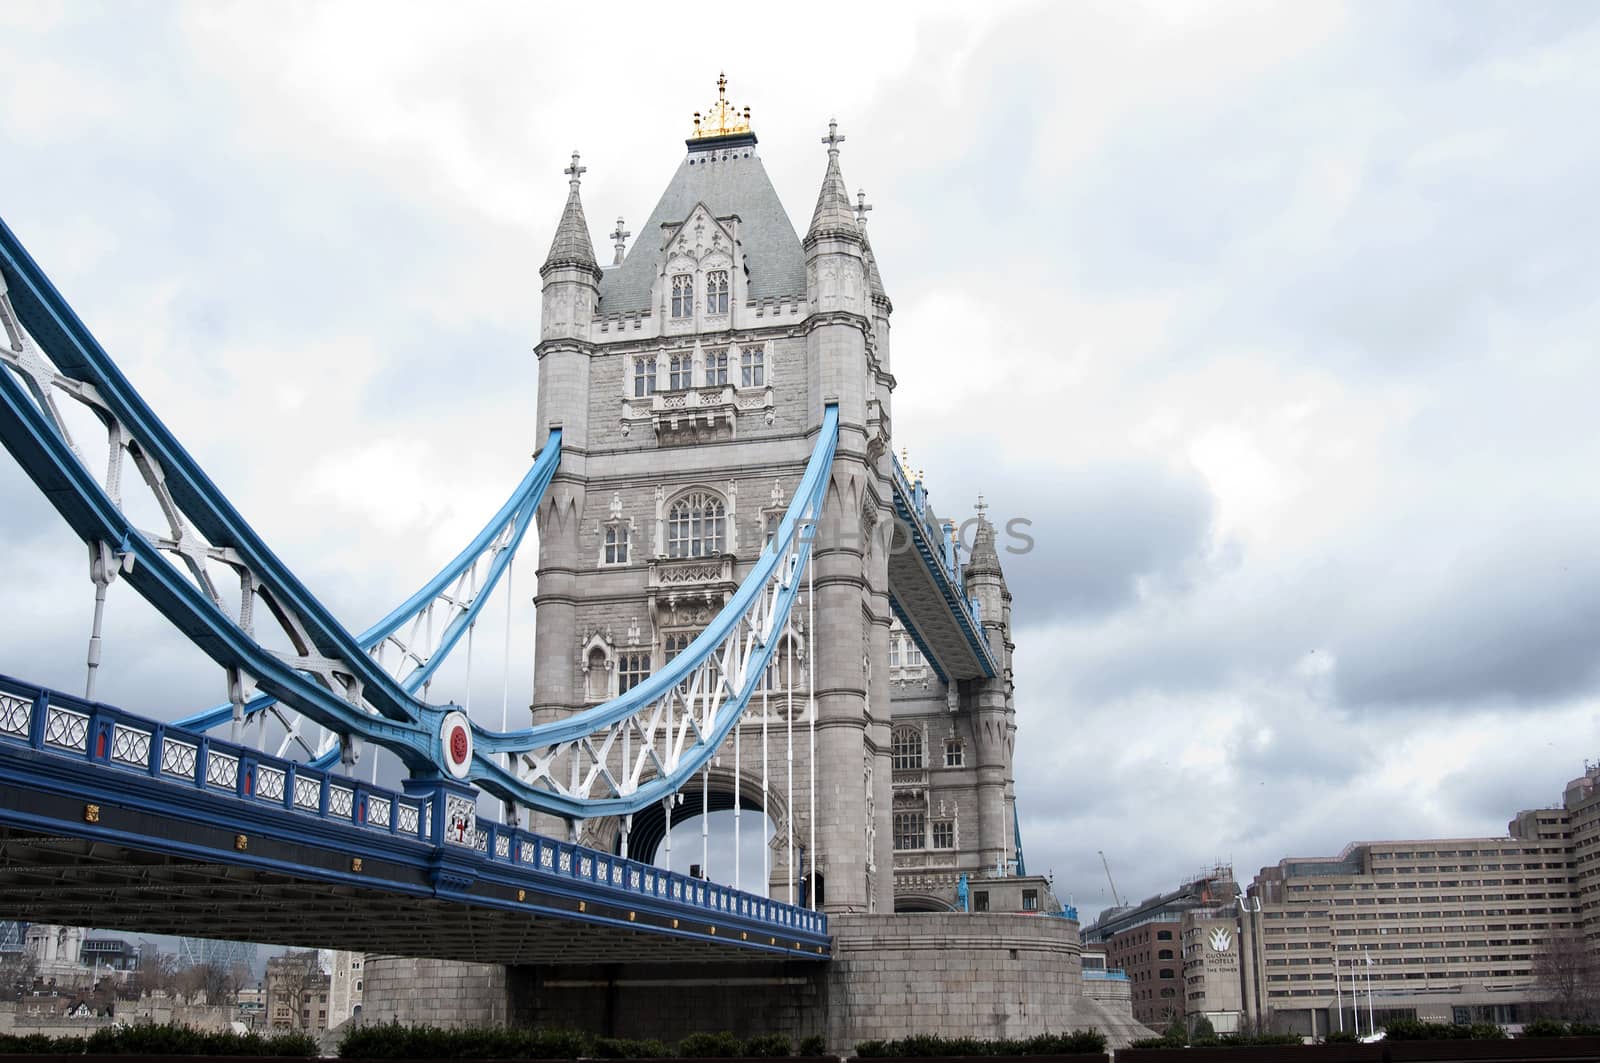 New Angle of Tower Bridge, London by rodrigobellizzi